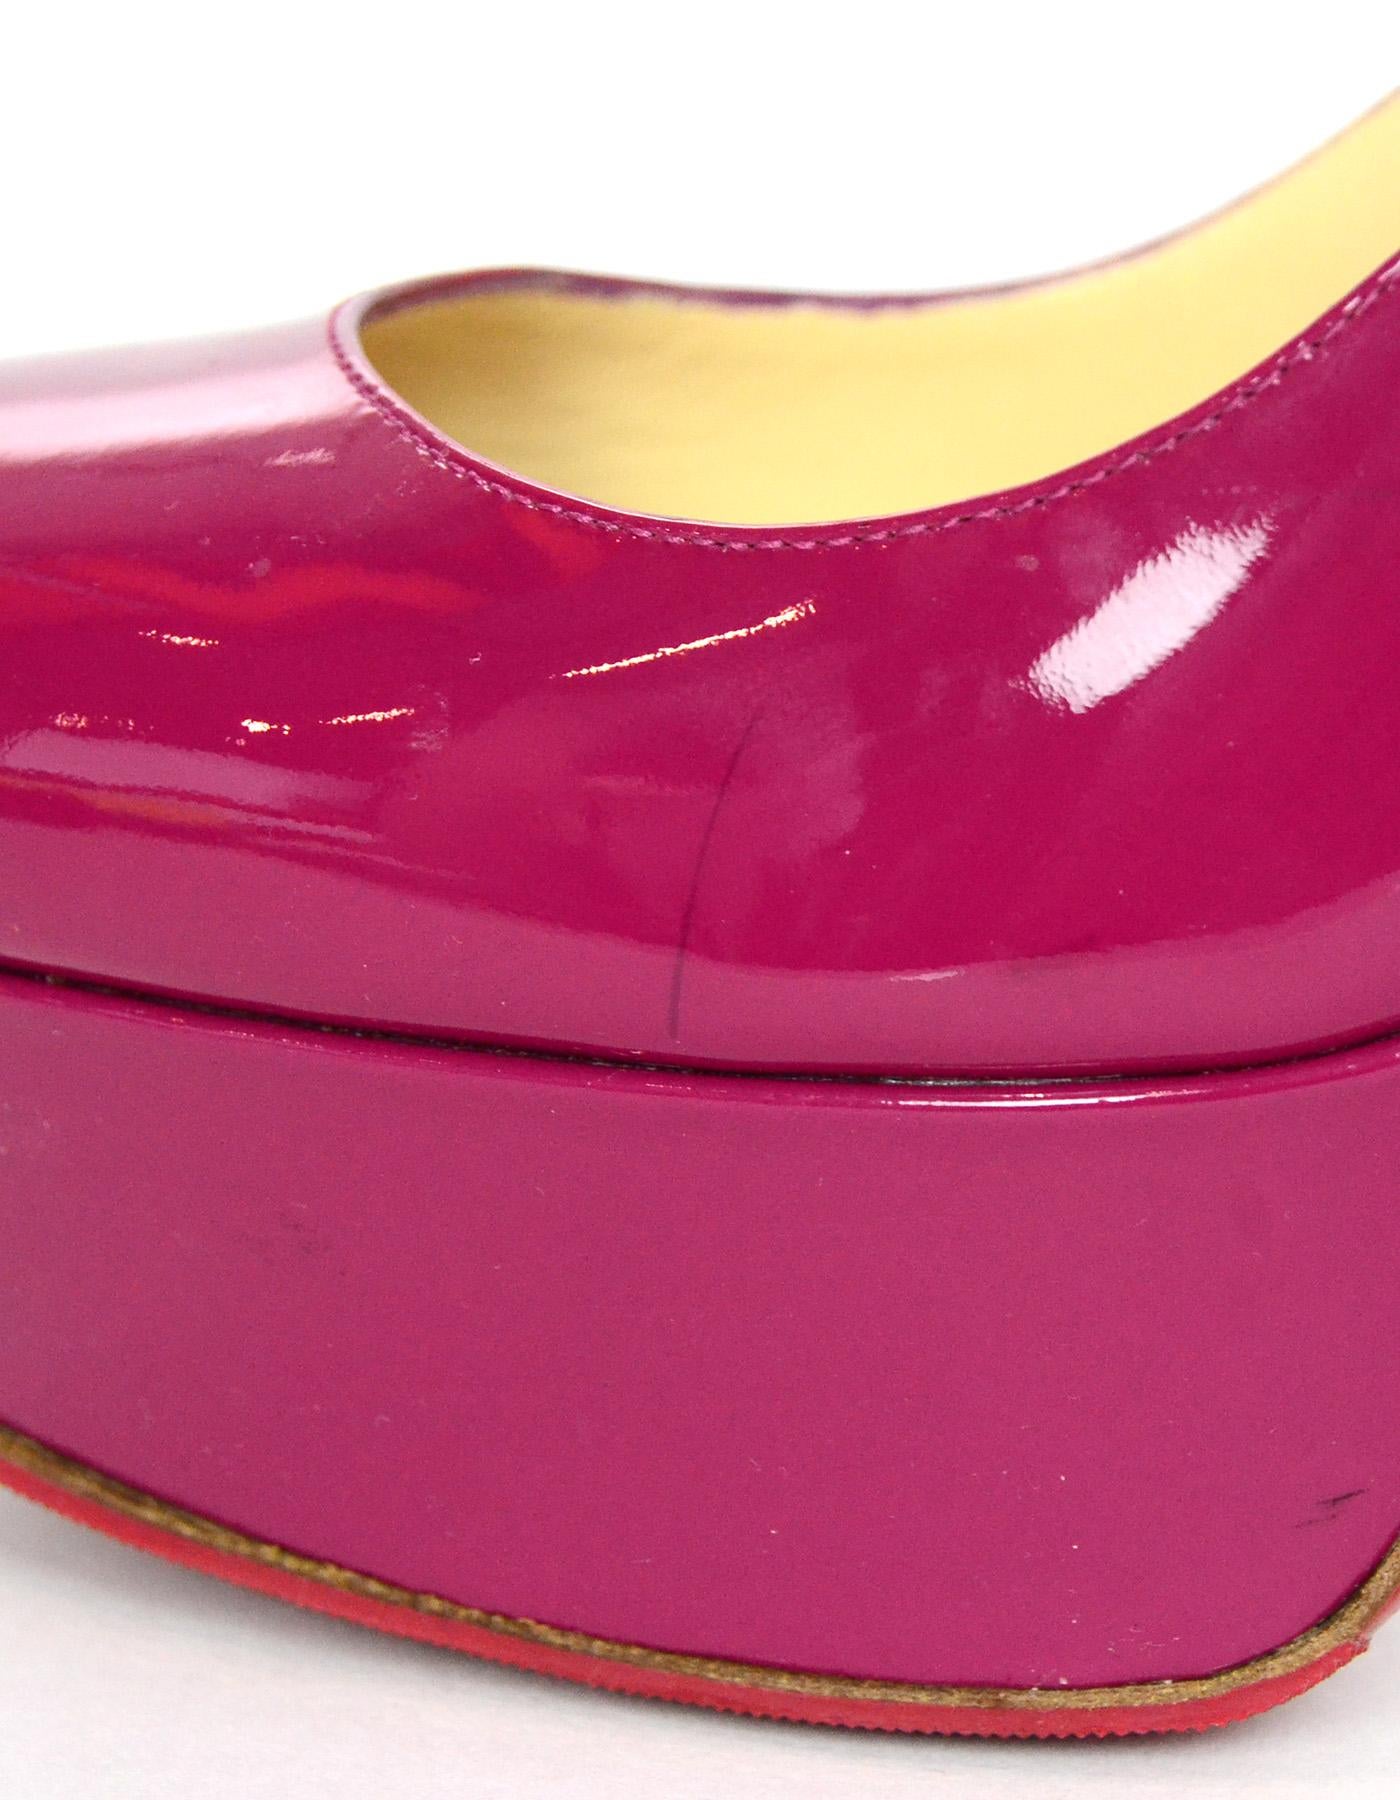 Christian Louboutin Pink Patent Leather Bianca 120 Platform Pumps Sz 39 rt. $845 1